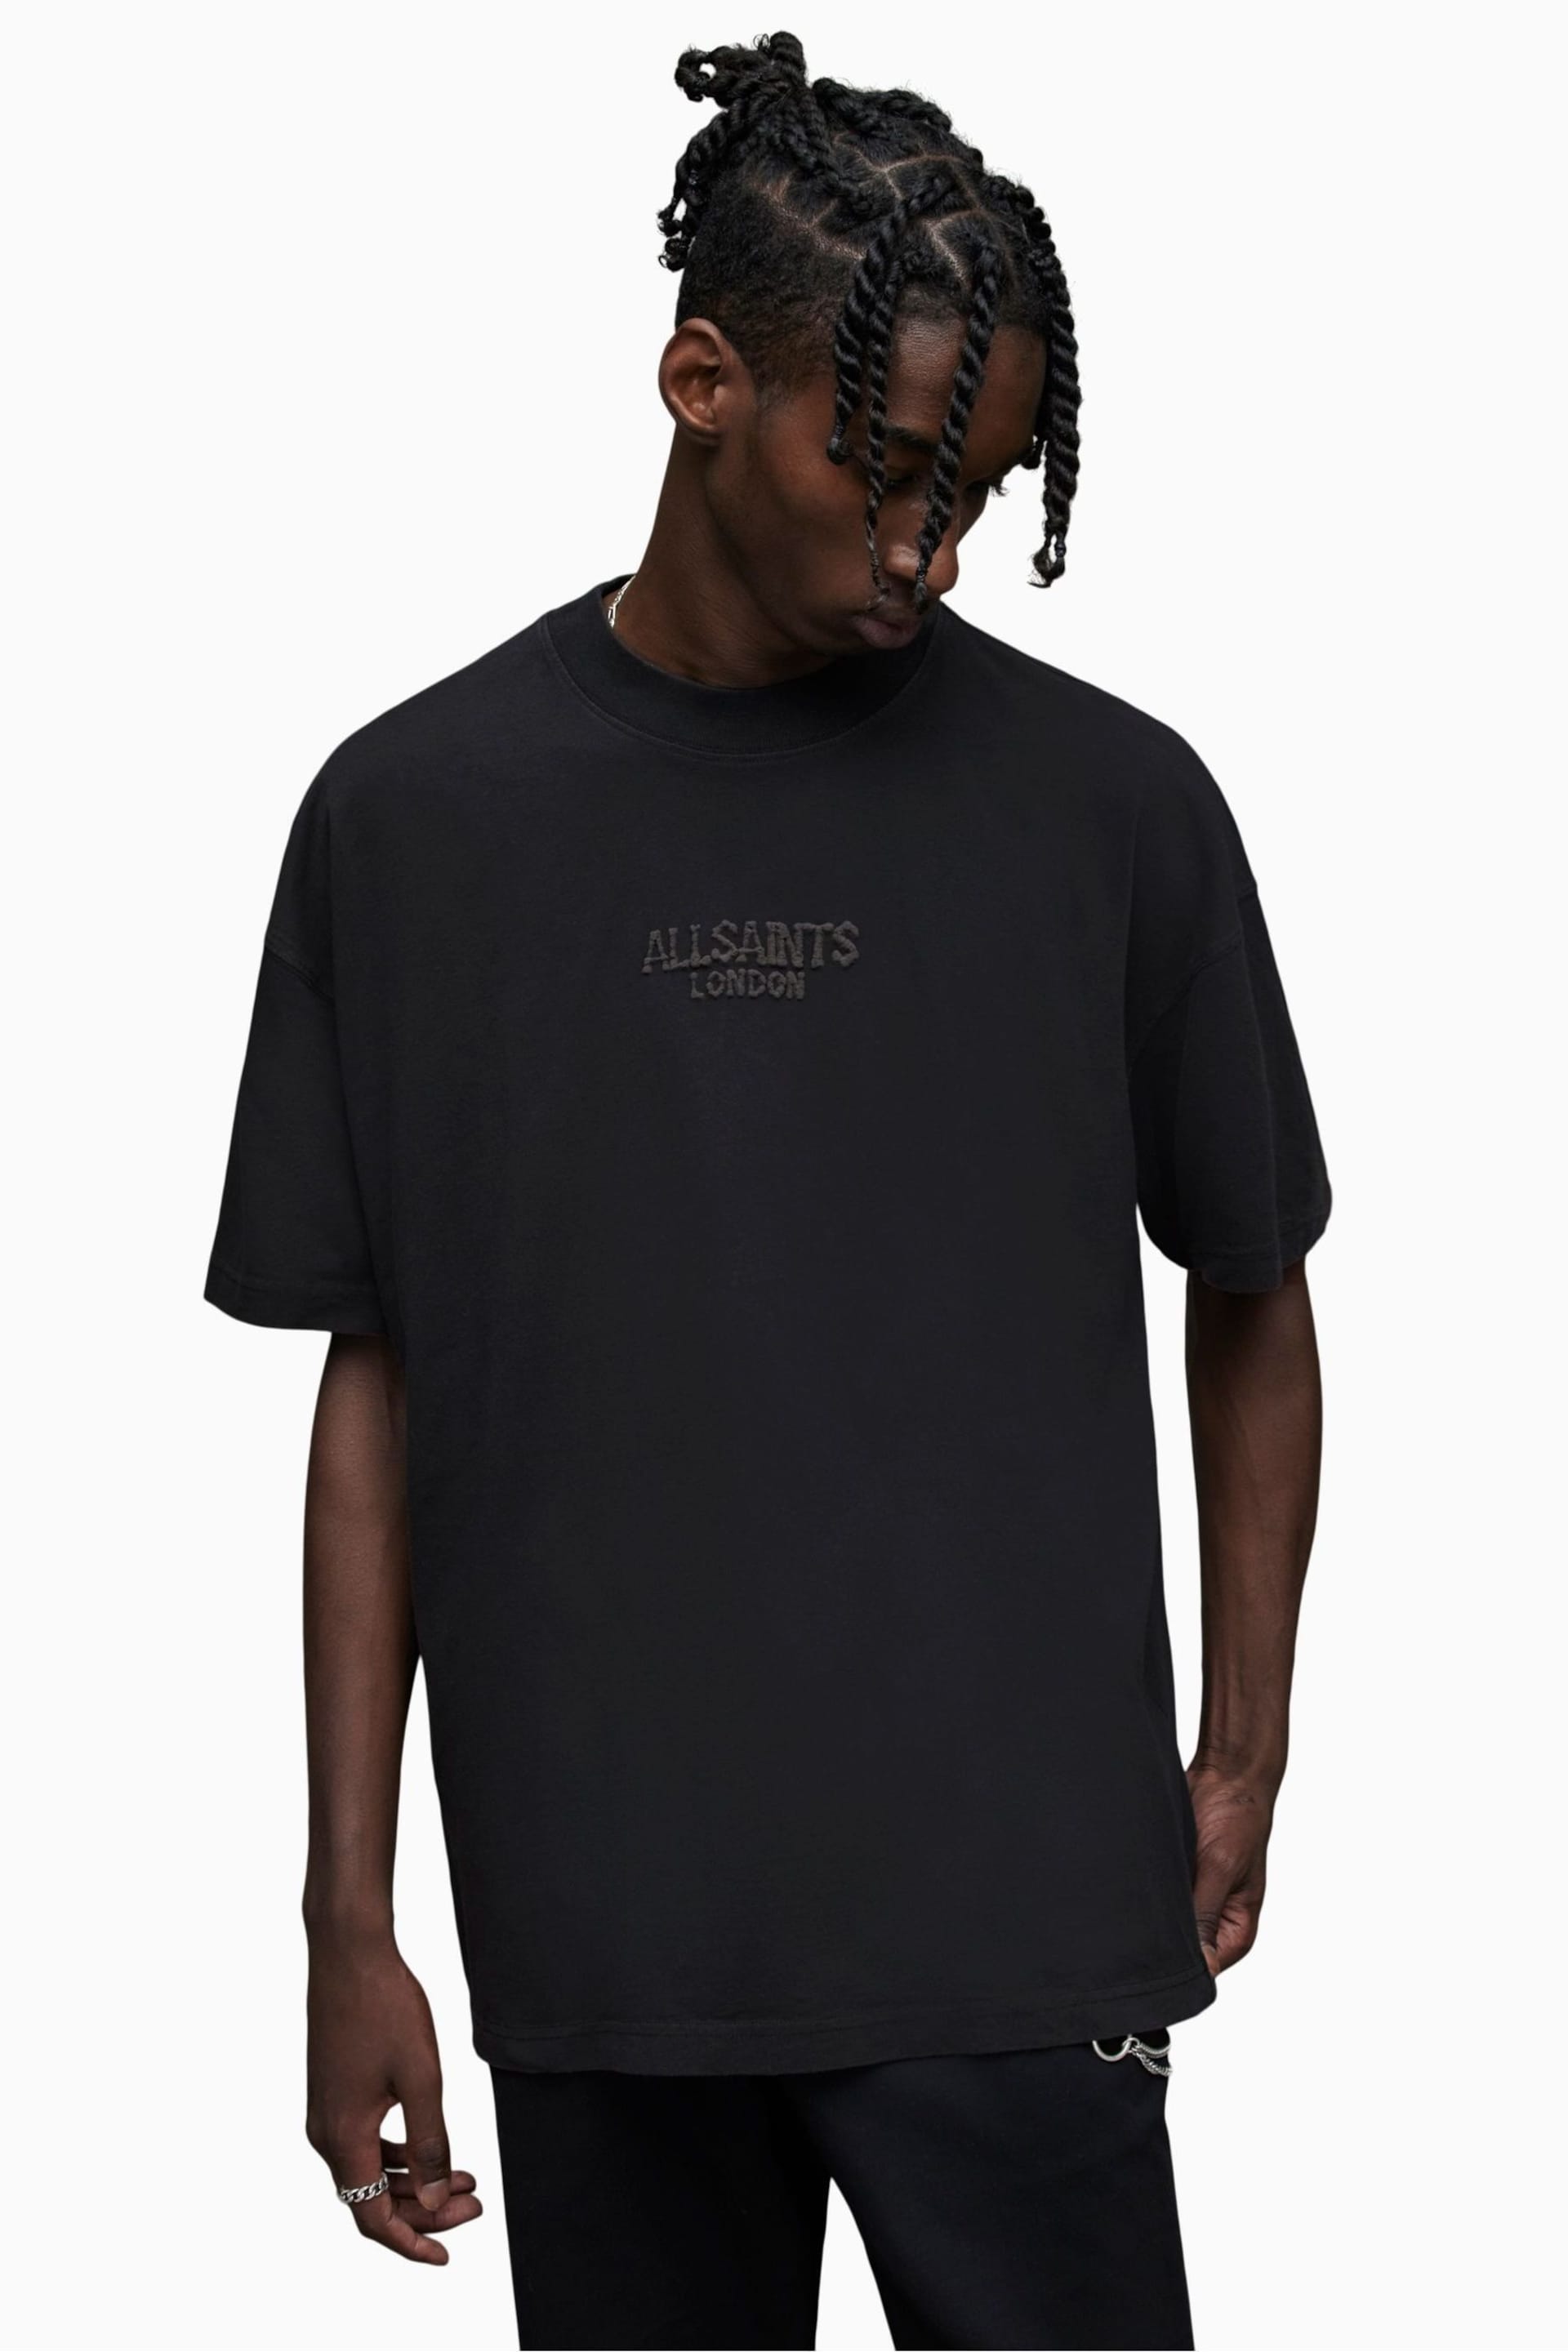 AllSaints Black Bones Short Sleeve Crew T-Shirt - Image 1 of 6